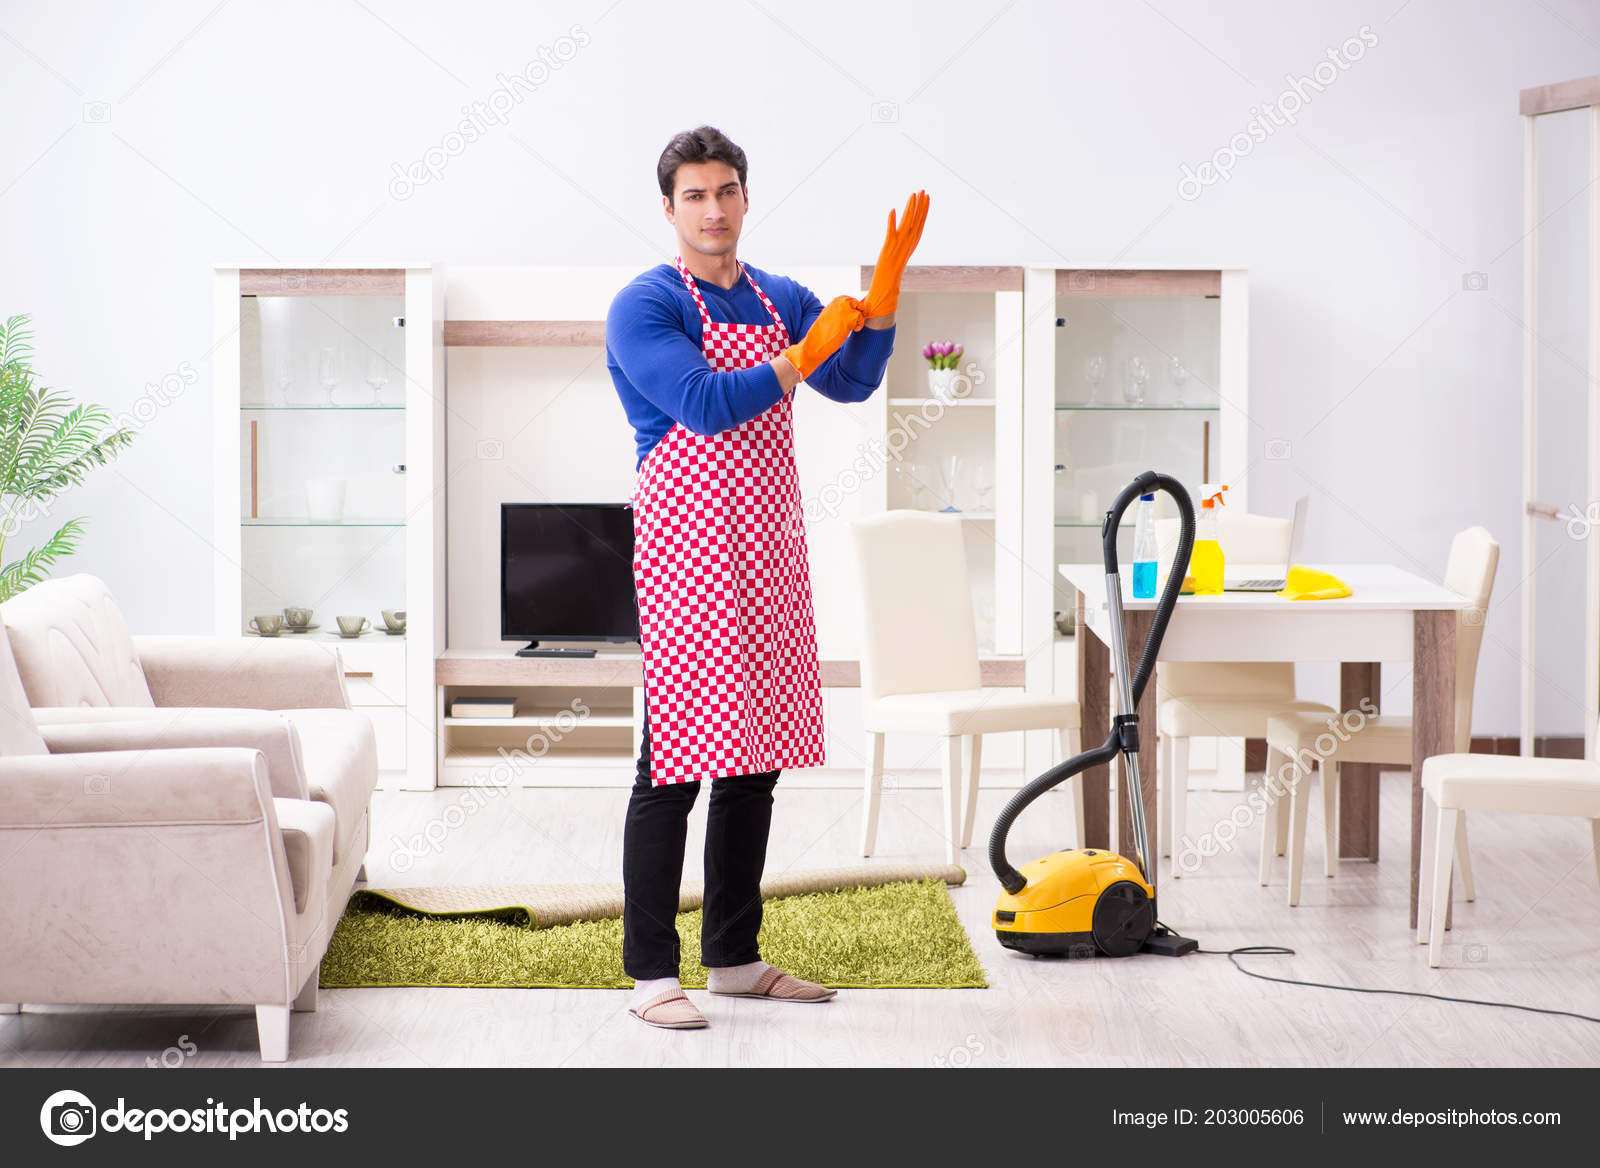 https://st4.depositphotos.com/1000975/20300/i/1600/depositphotos_203005606-stock-photo-contractor-man-cleaning-house-doing.jpg